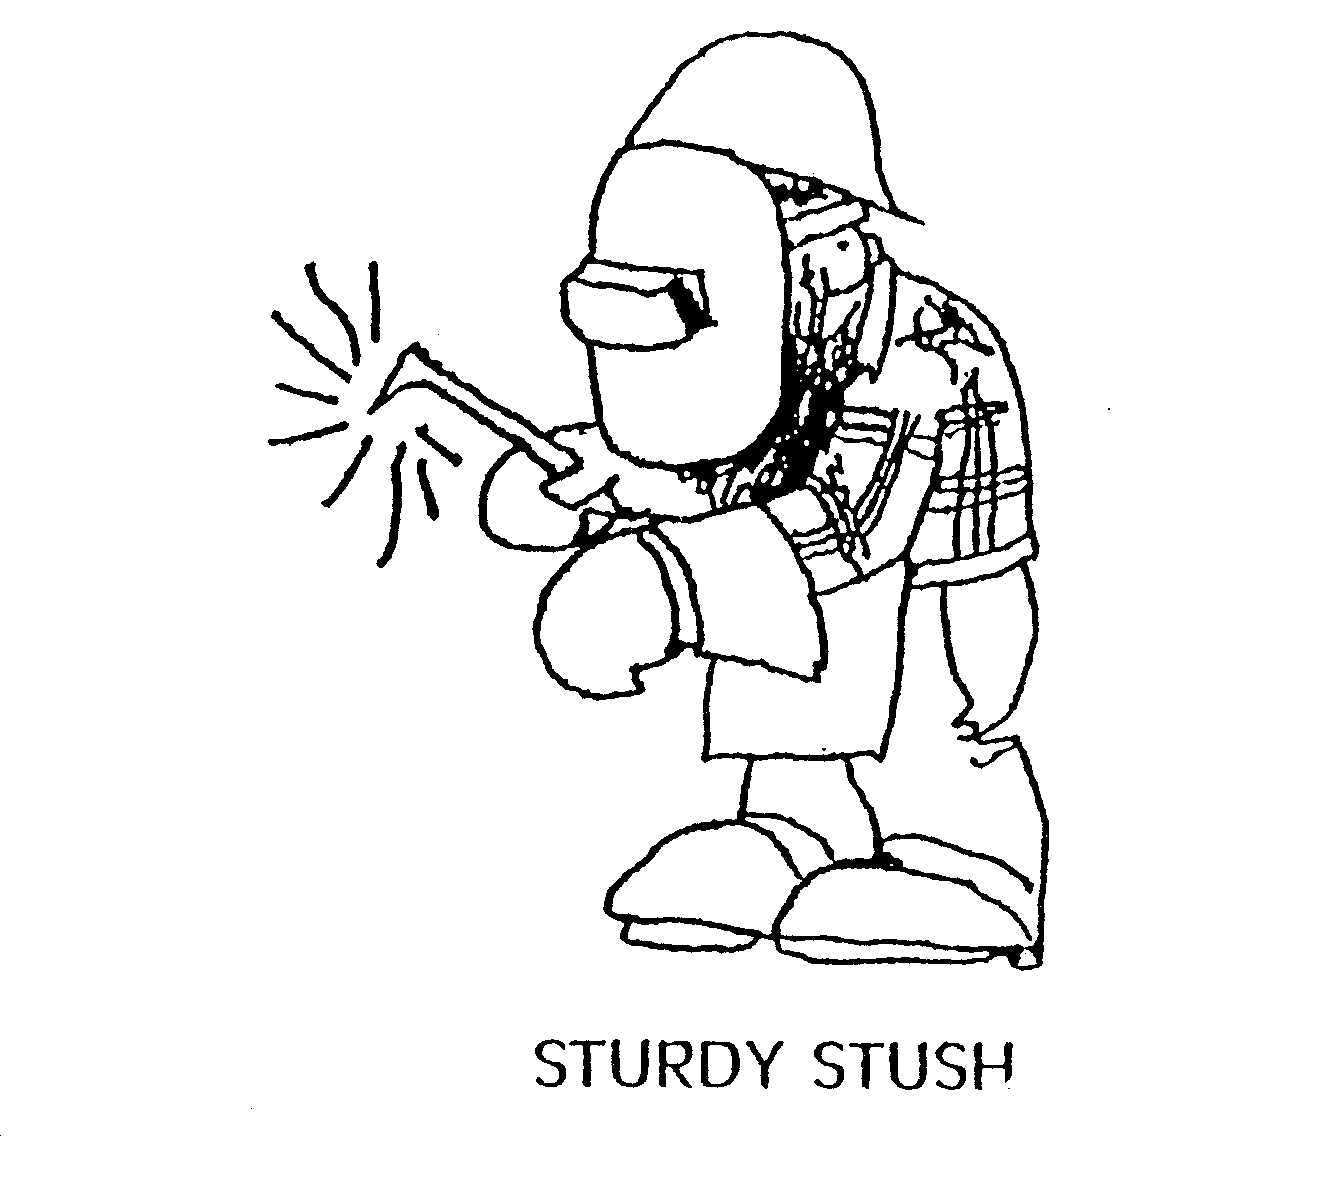  STURDY STUSH